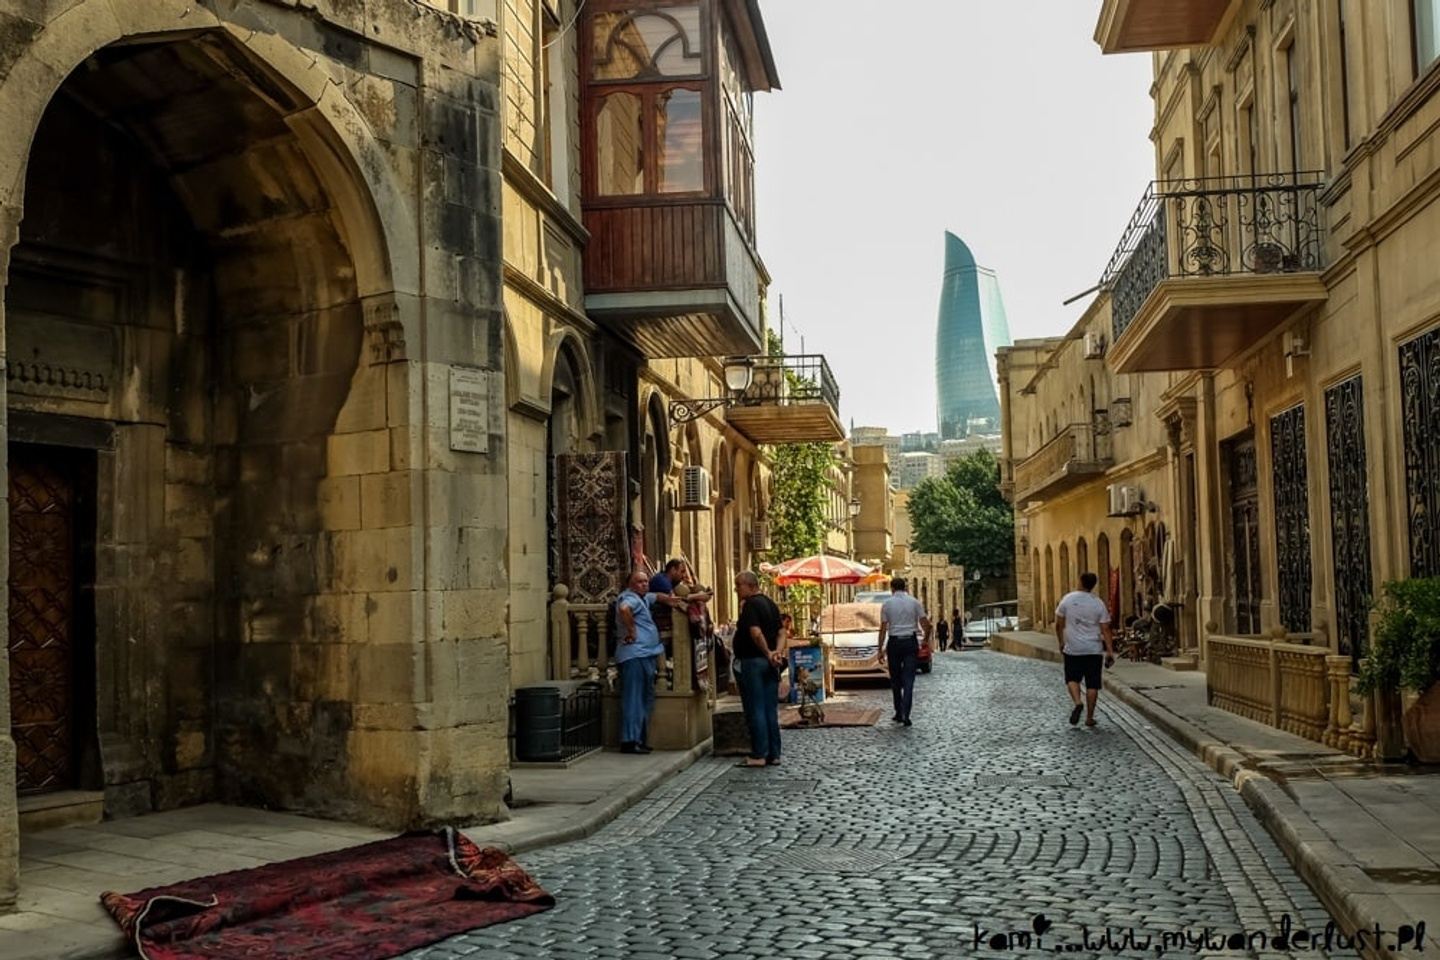 Epic Baku Trip & Cuisine